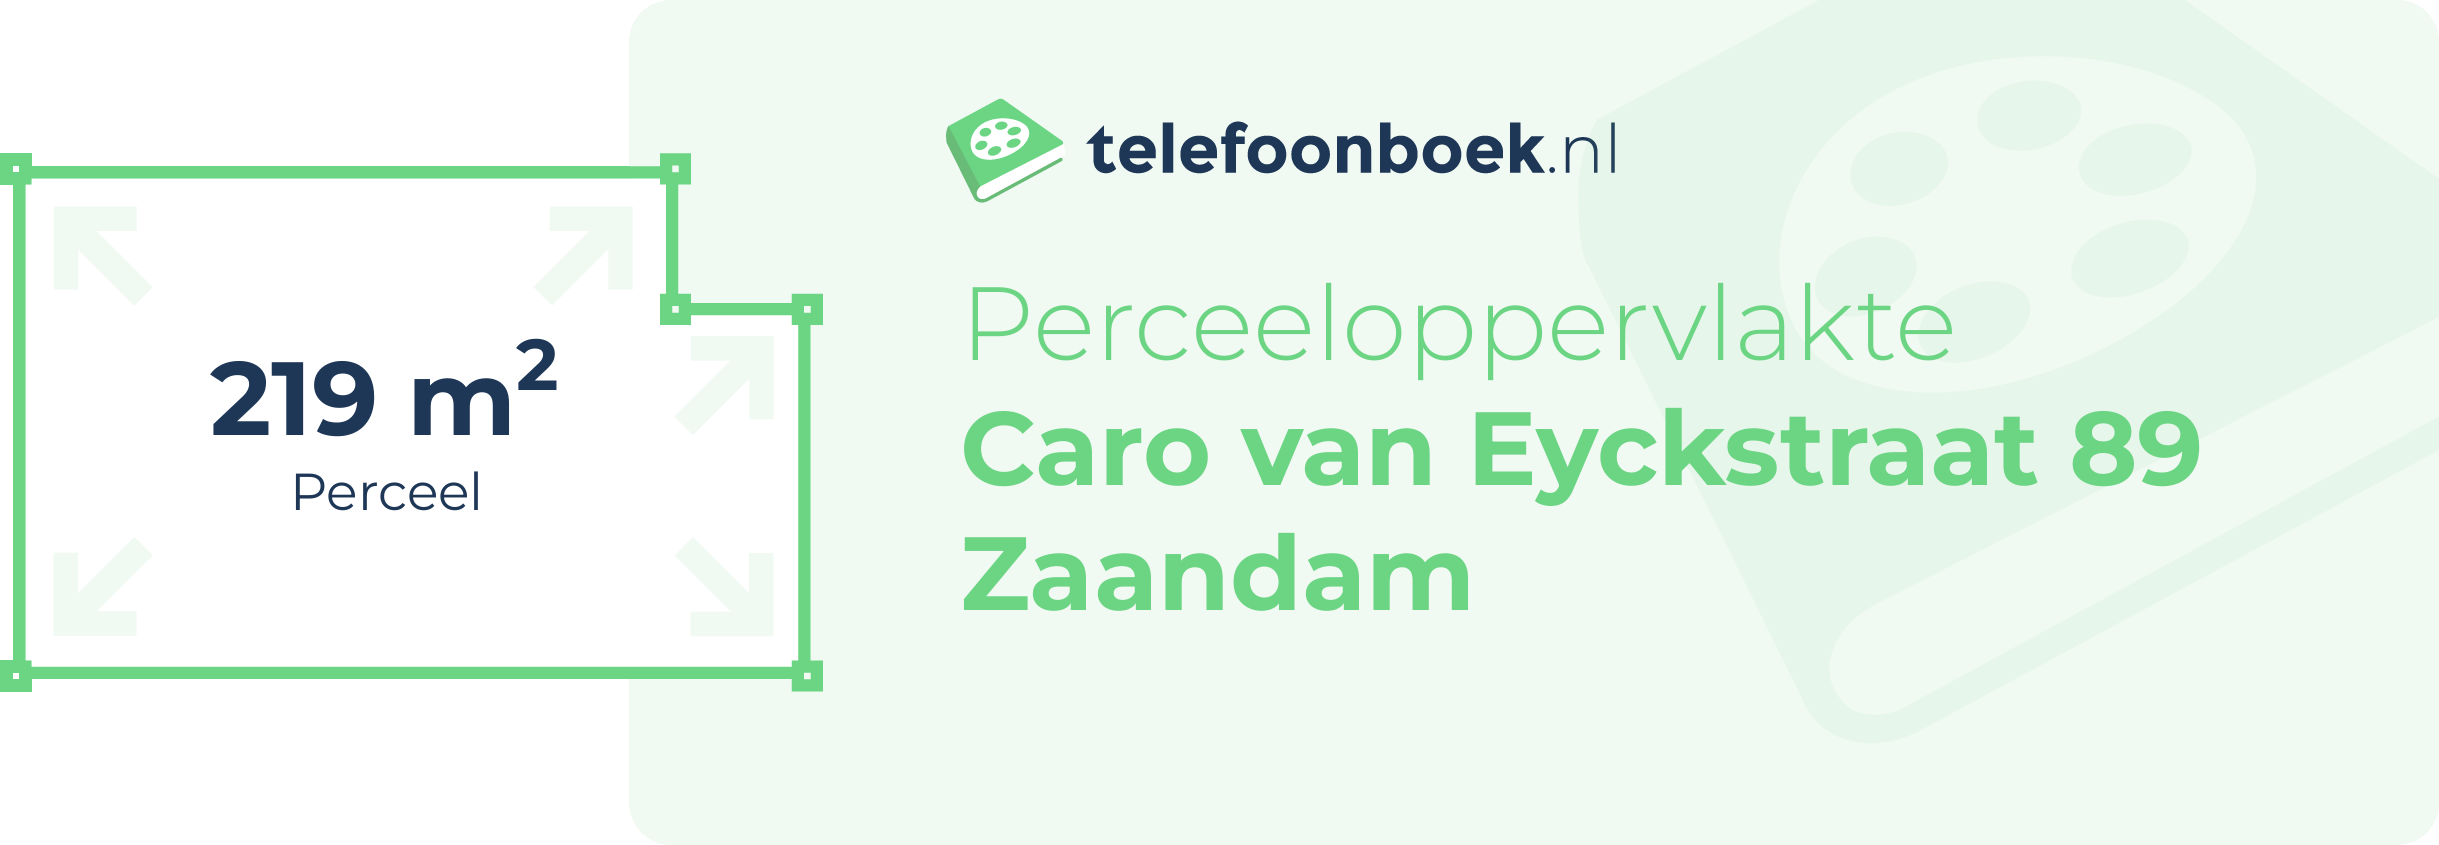 Perceeloppervlakte Caro Van Eyckstraat 89 Zaandam